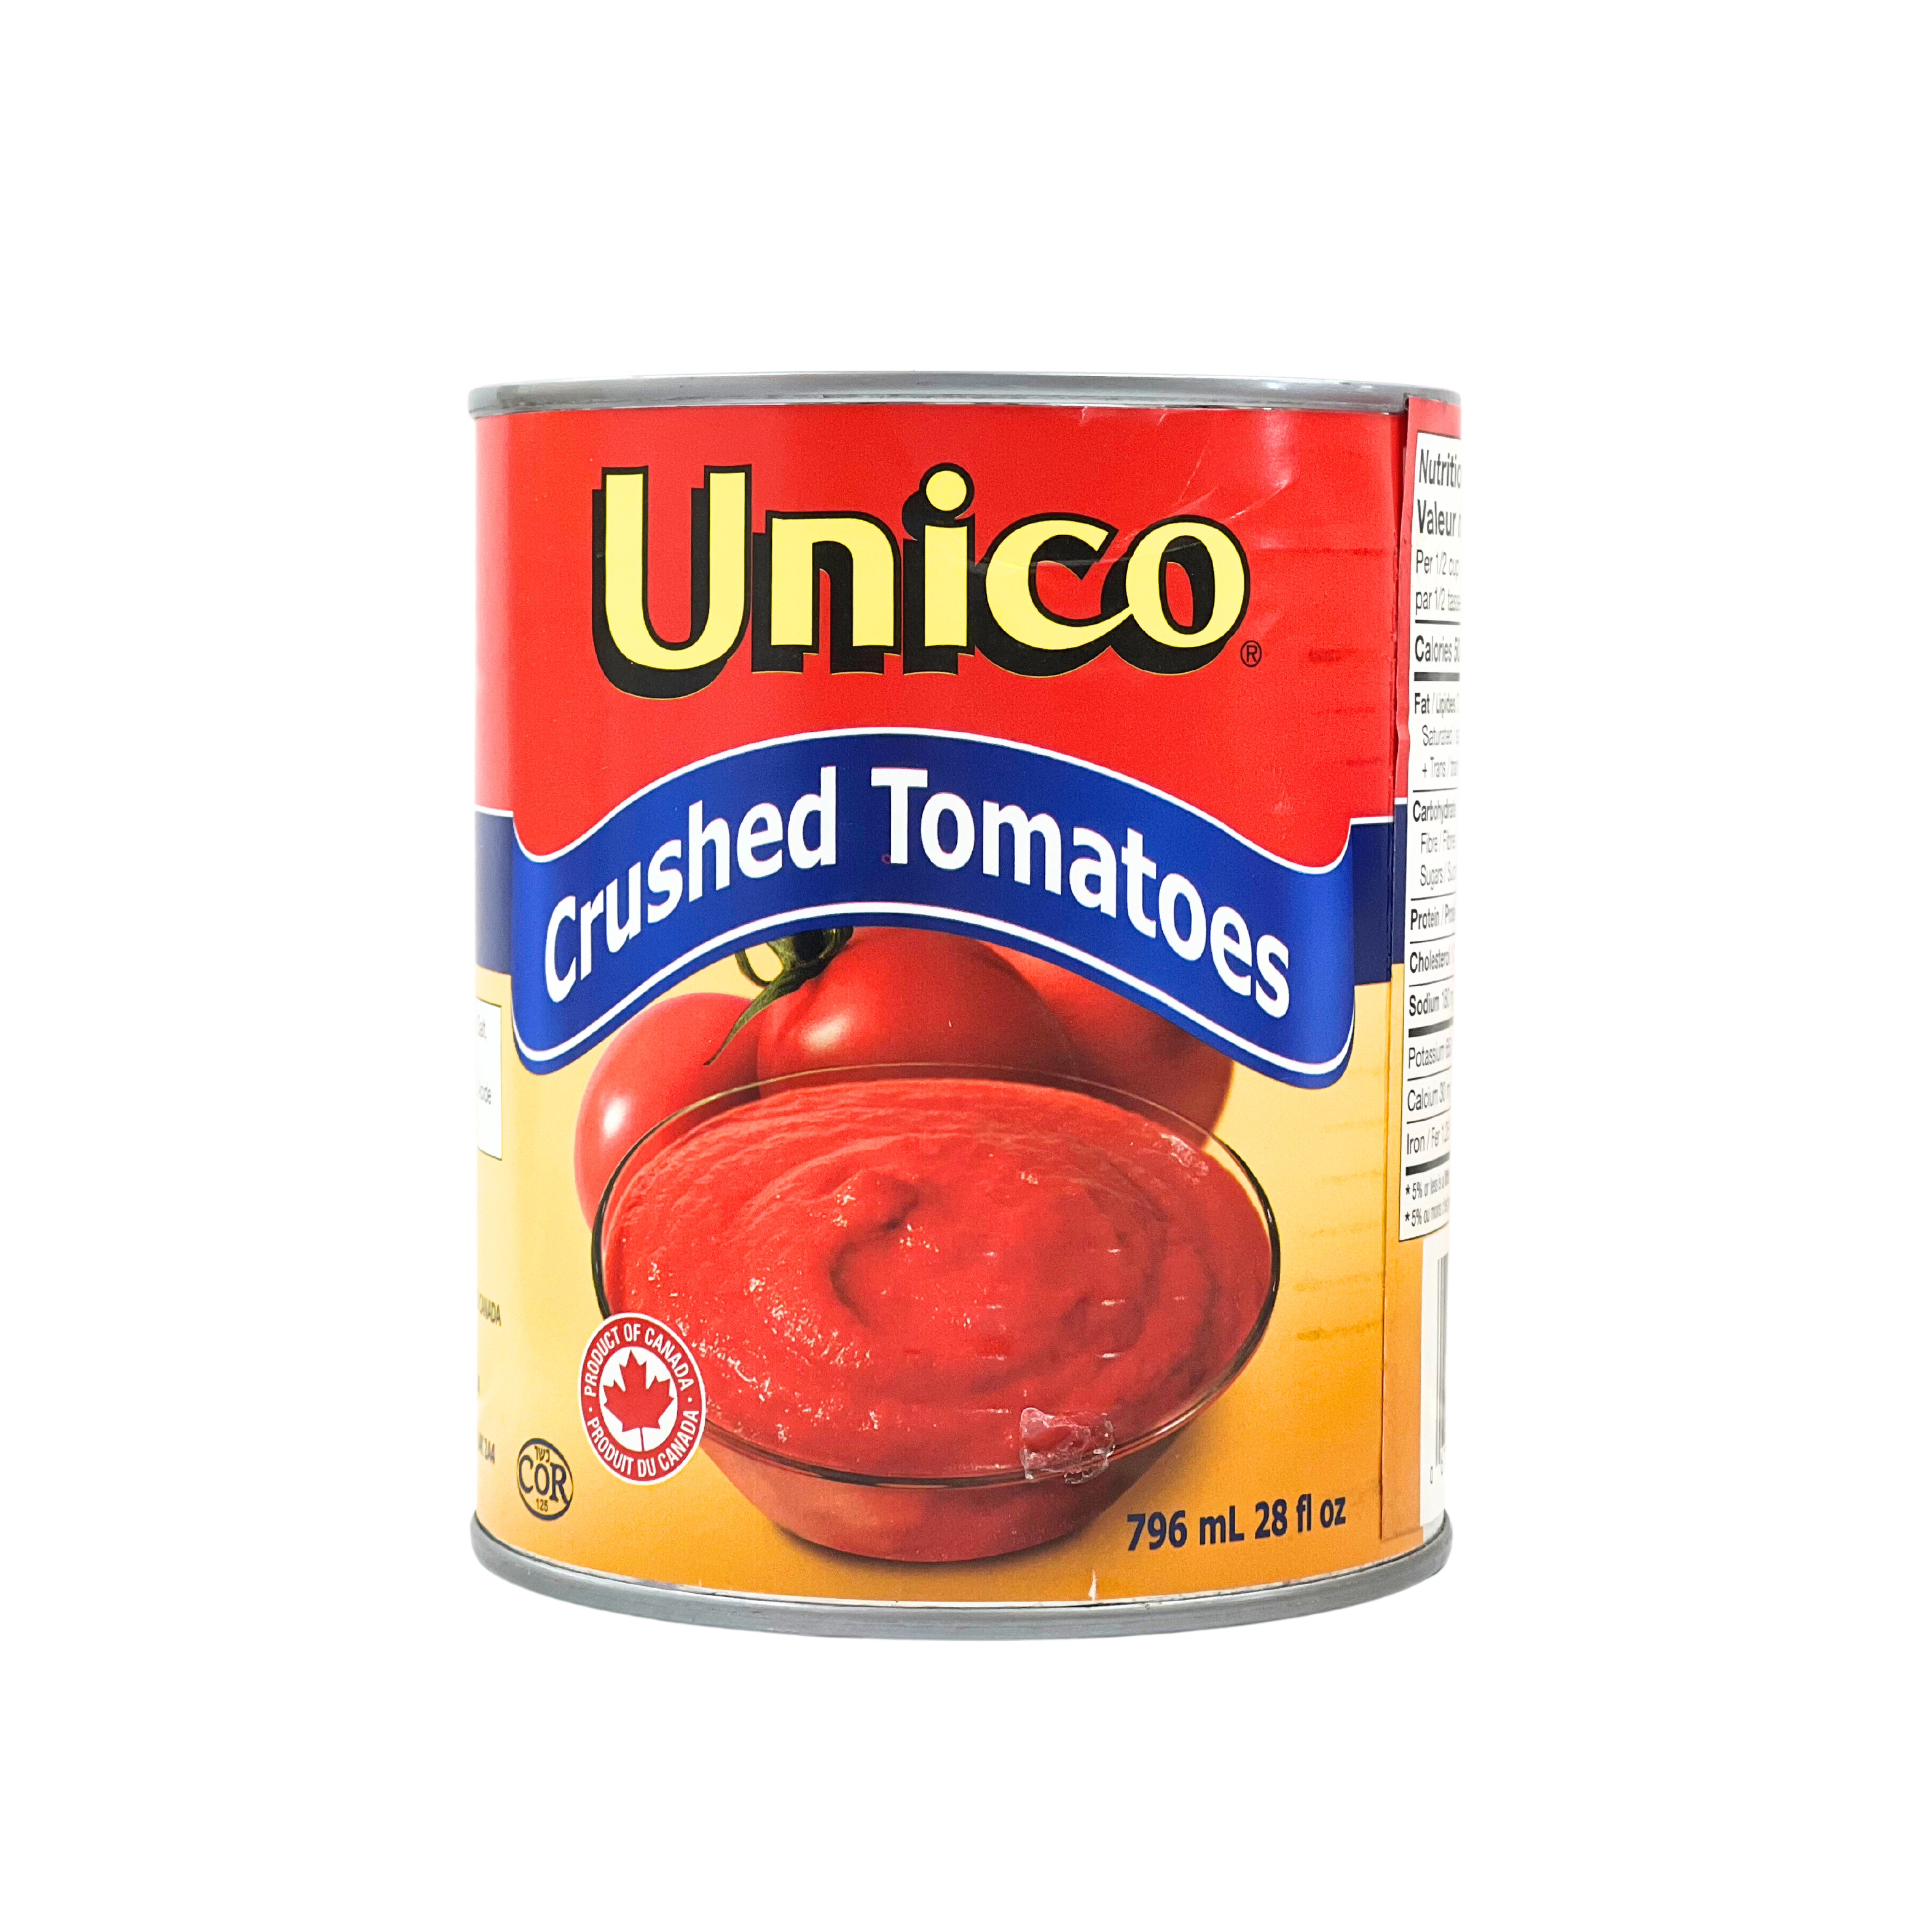 Unico Crushed Tomatoes 796ml